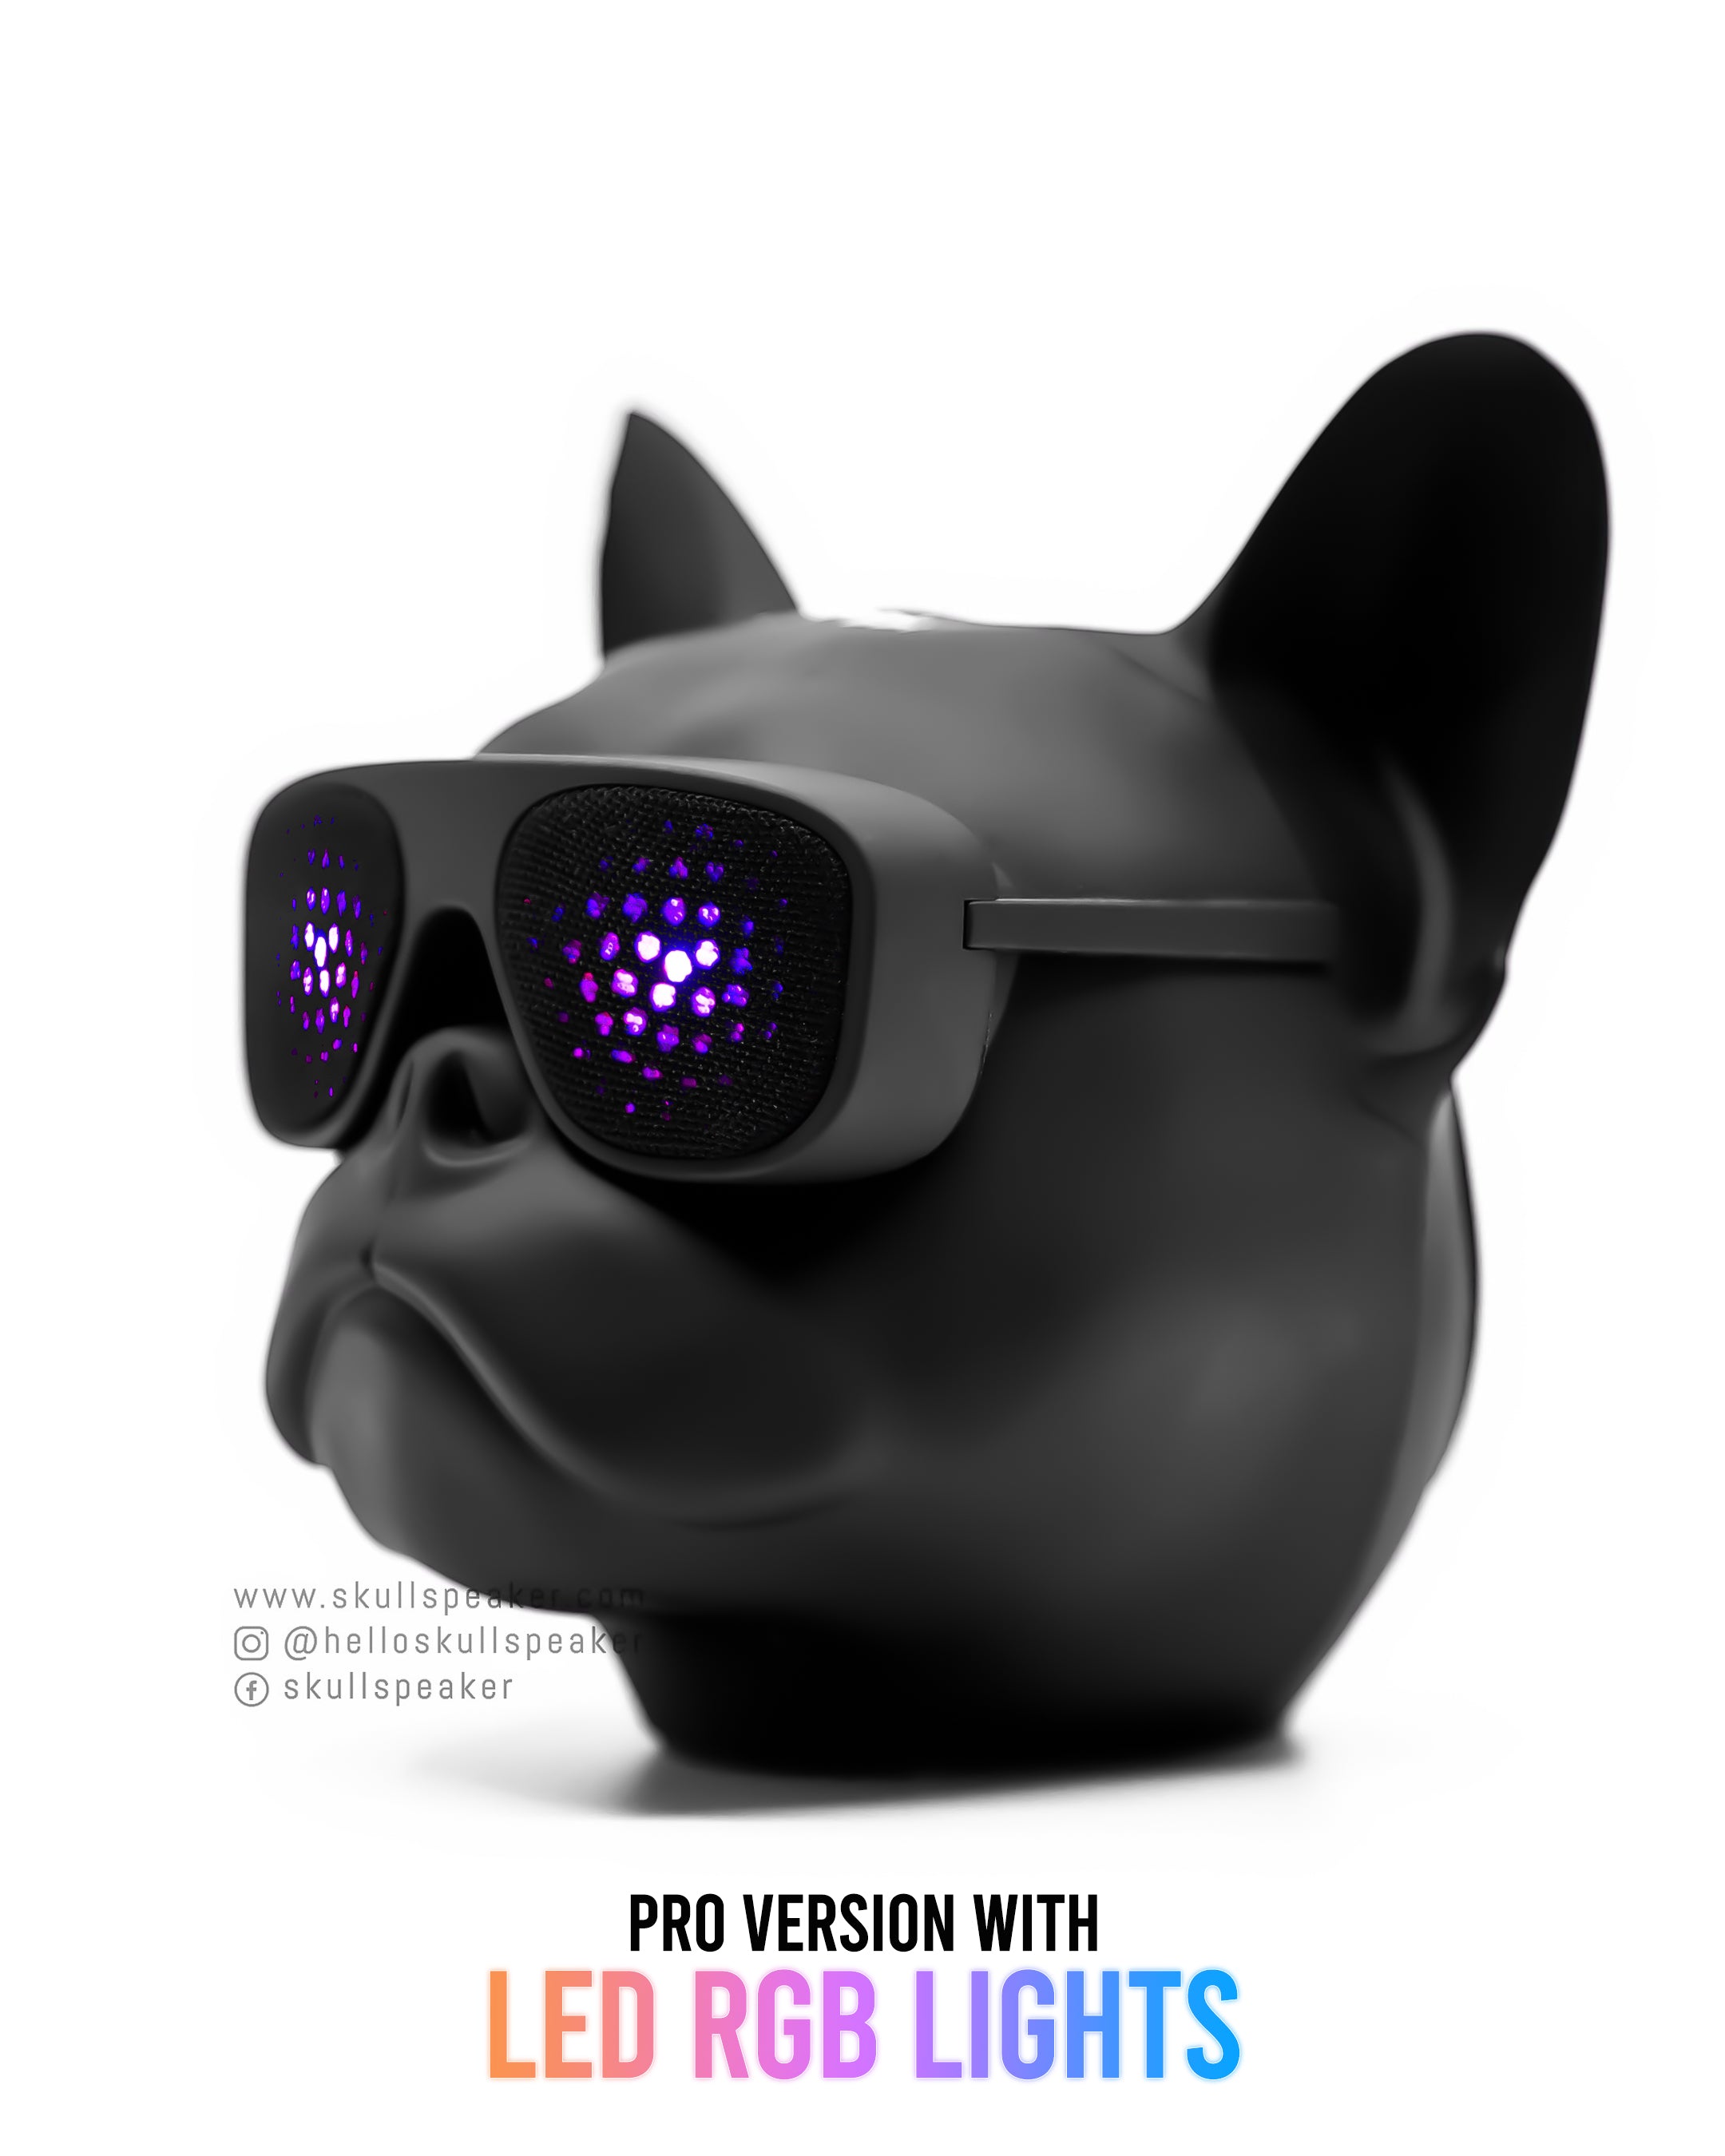 LED rgb beast dog speaker pro version with lights